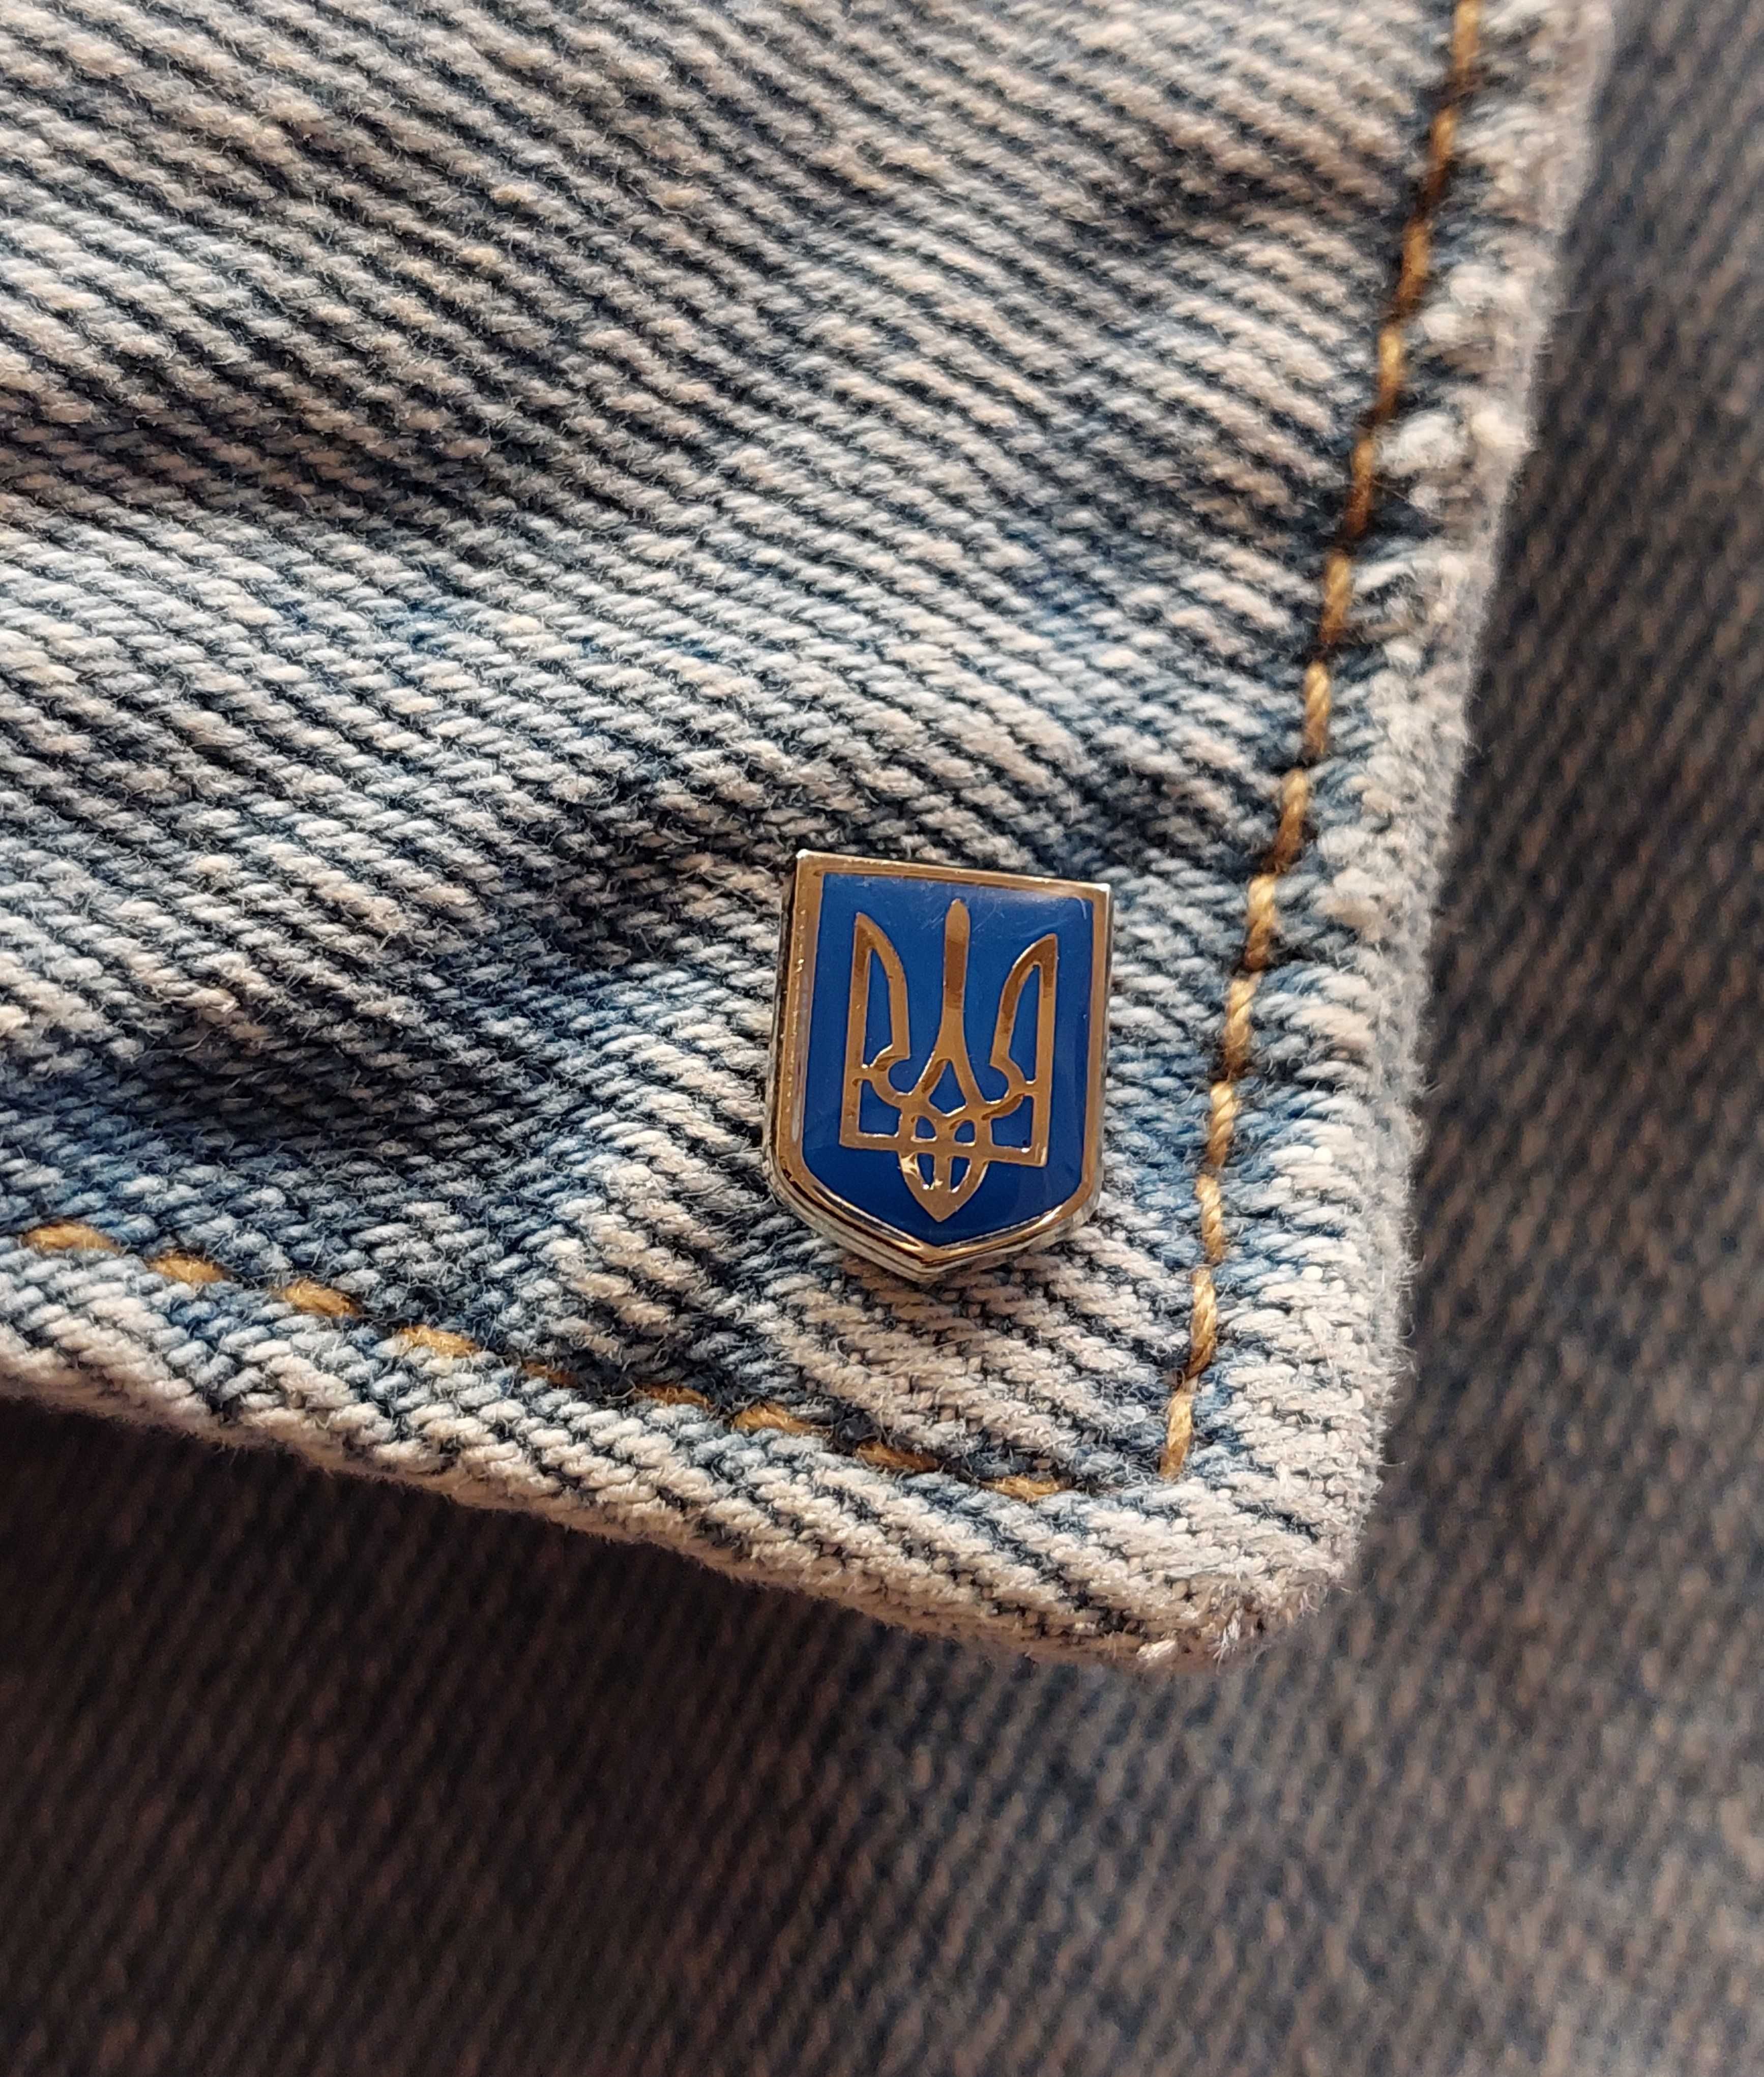 Патріотичні значки України (тризуб, герб, брошка, прапор) 85 грн/шт